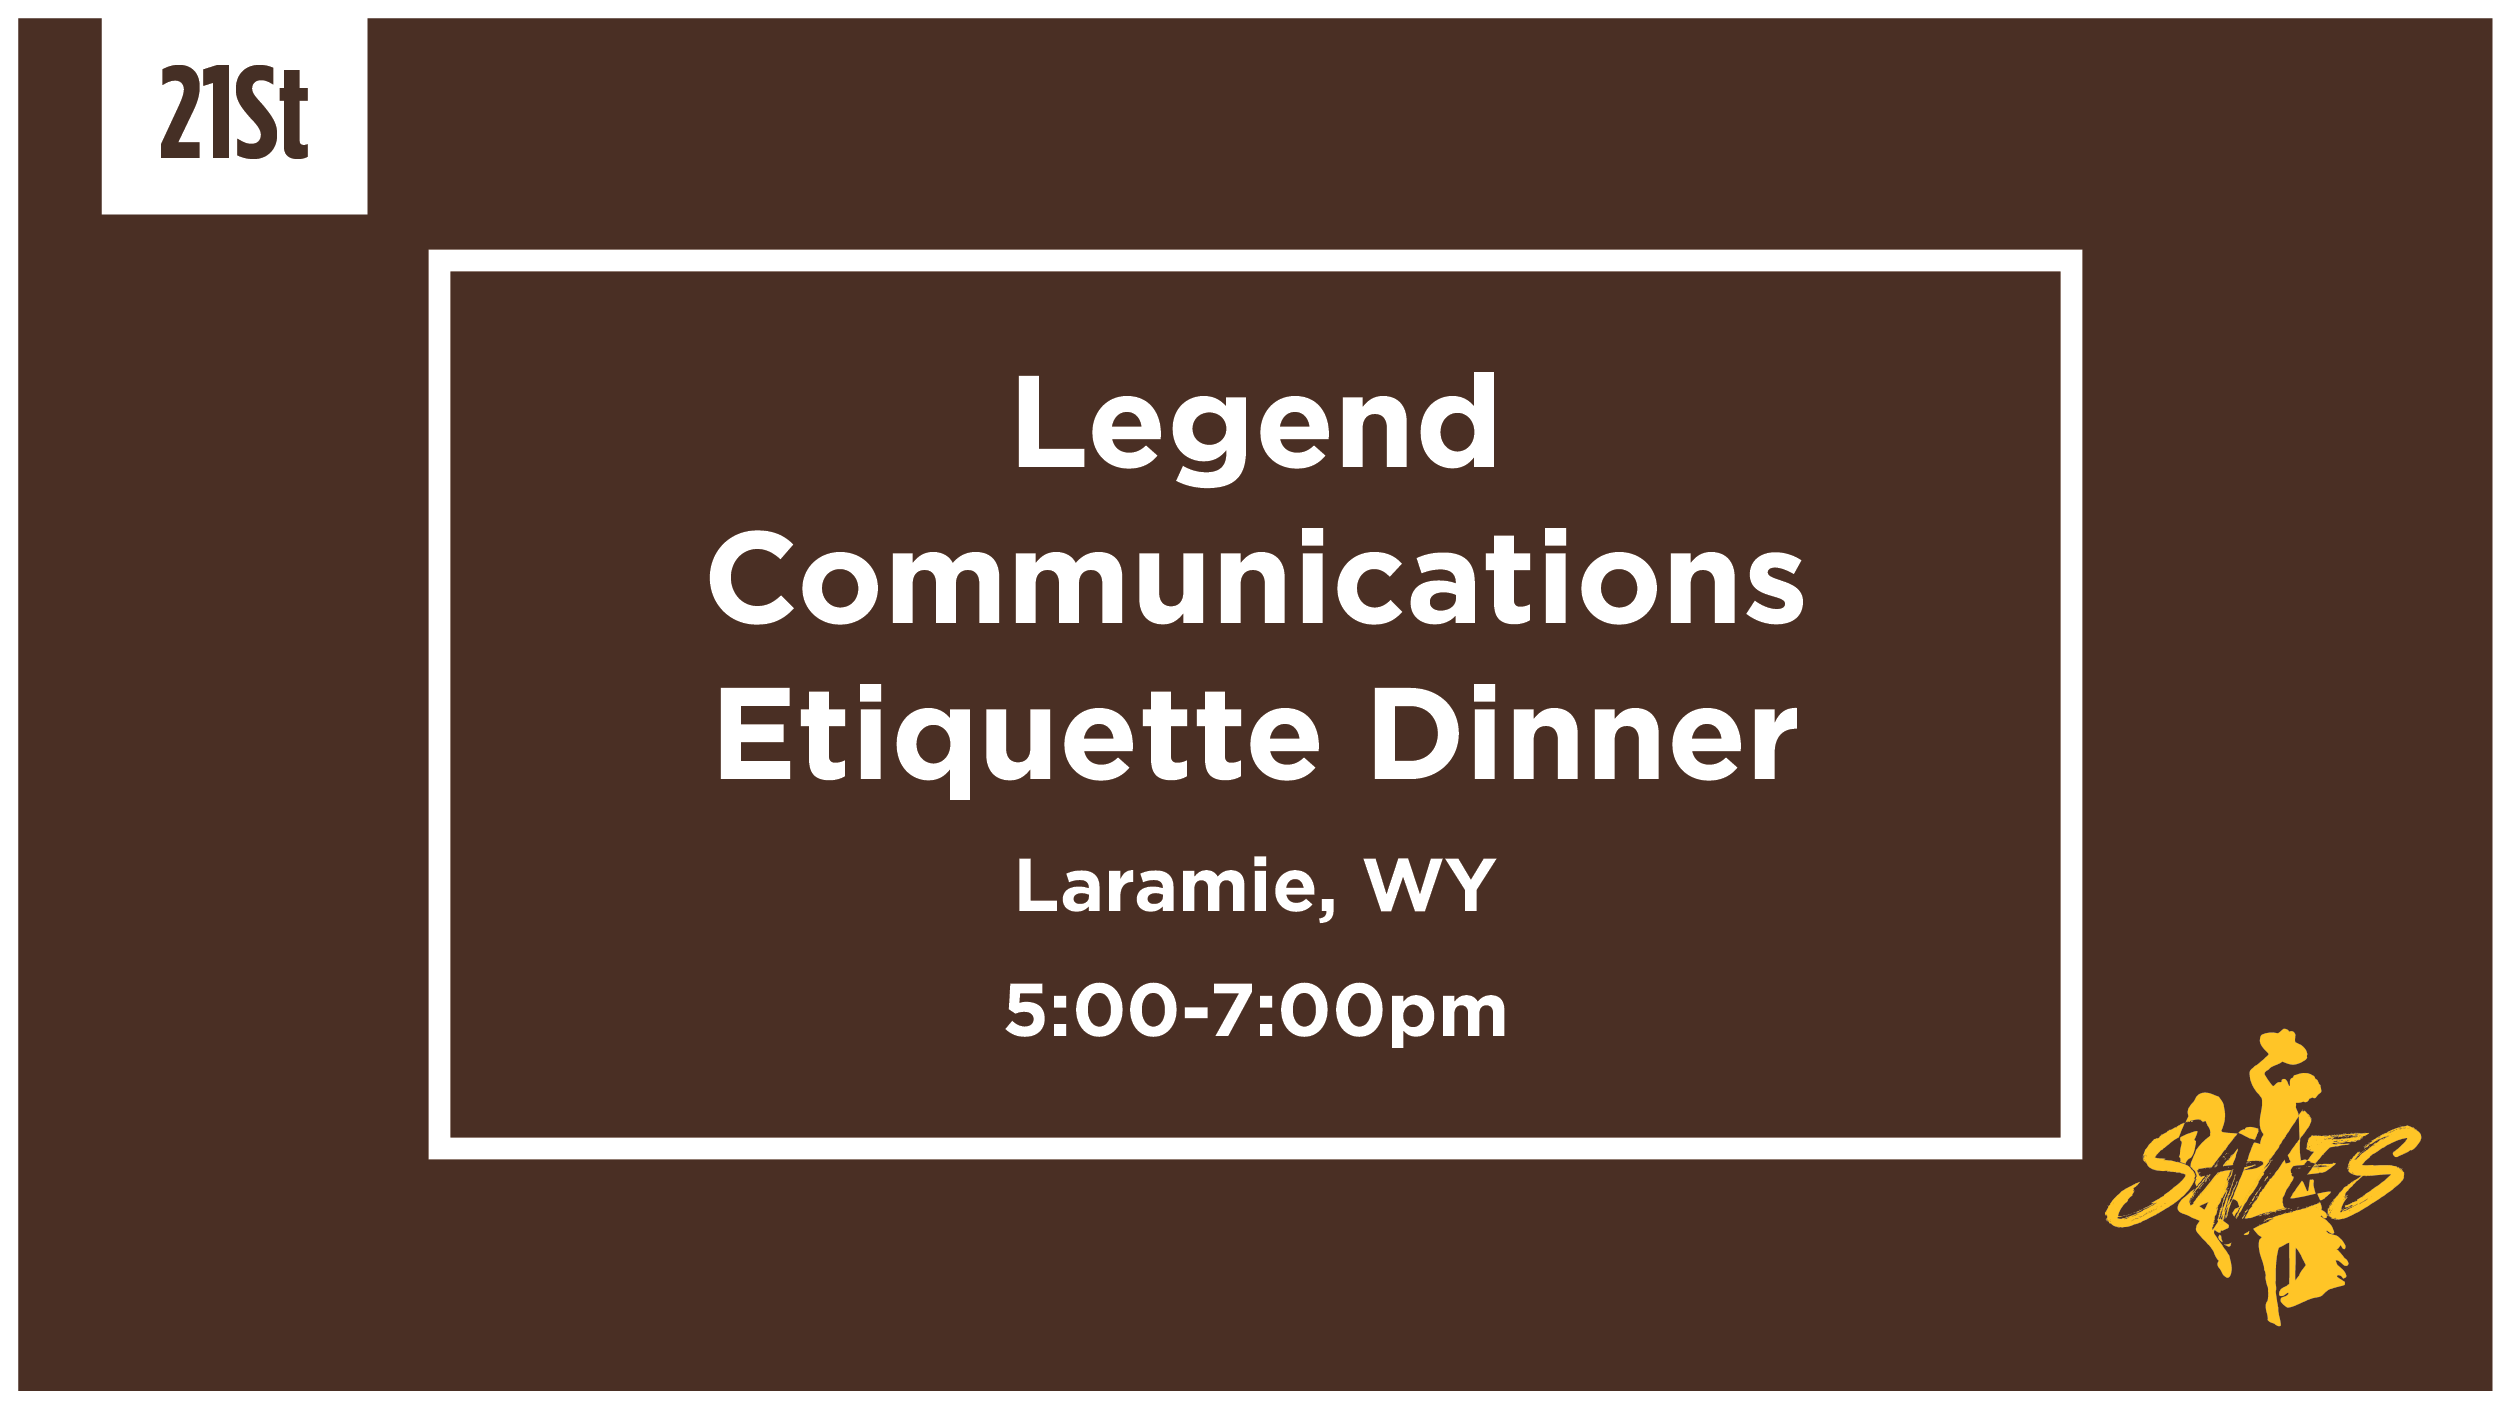 Legend Communications Etiquette Dinner